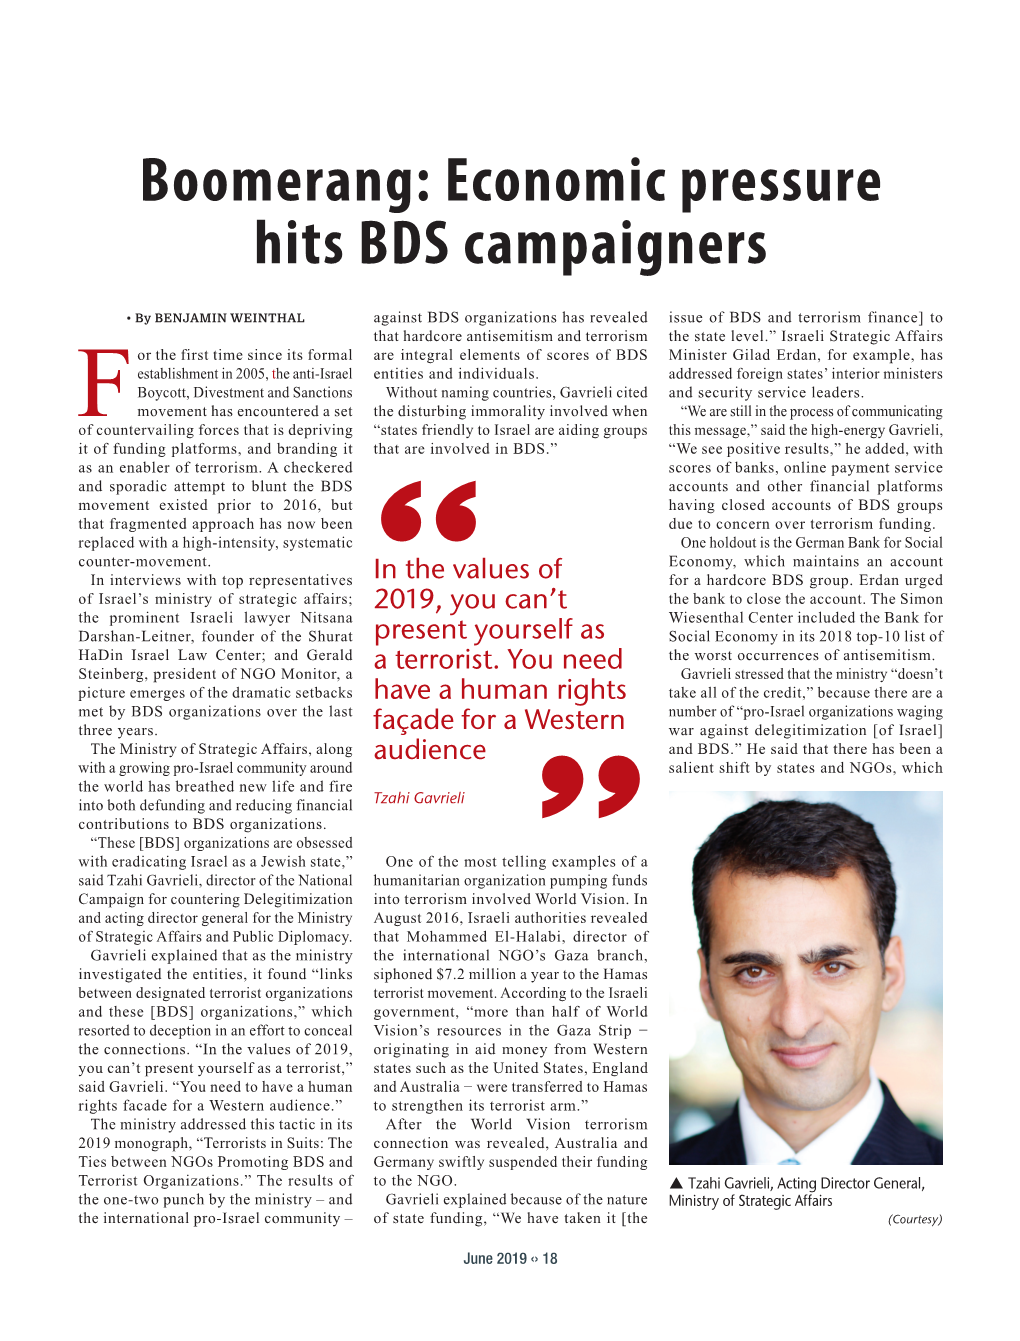 Boomerang: Economic Pressure Hits BDS Campaigners